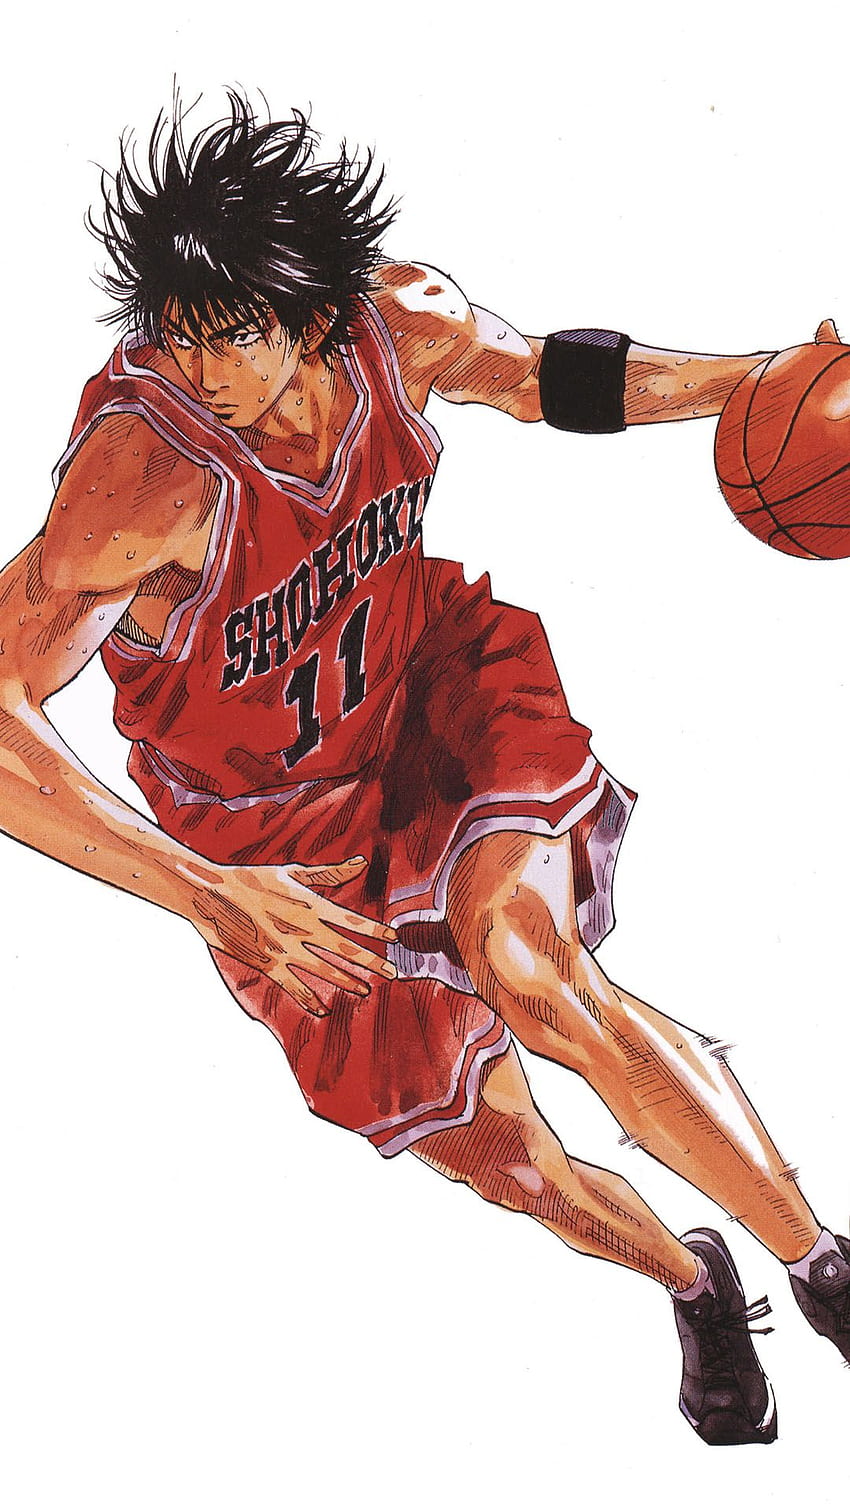 Anime sports basketball Slam Dunk Series Hanamichi Sakuragi Character  wallpaper  1440x2141  723425  WallpaperUP